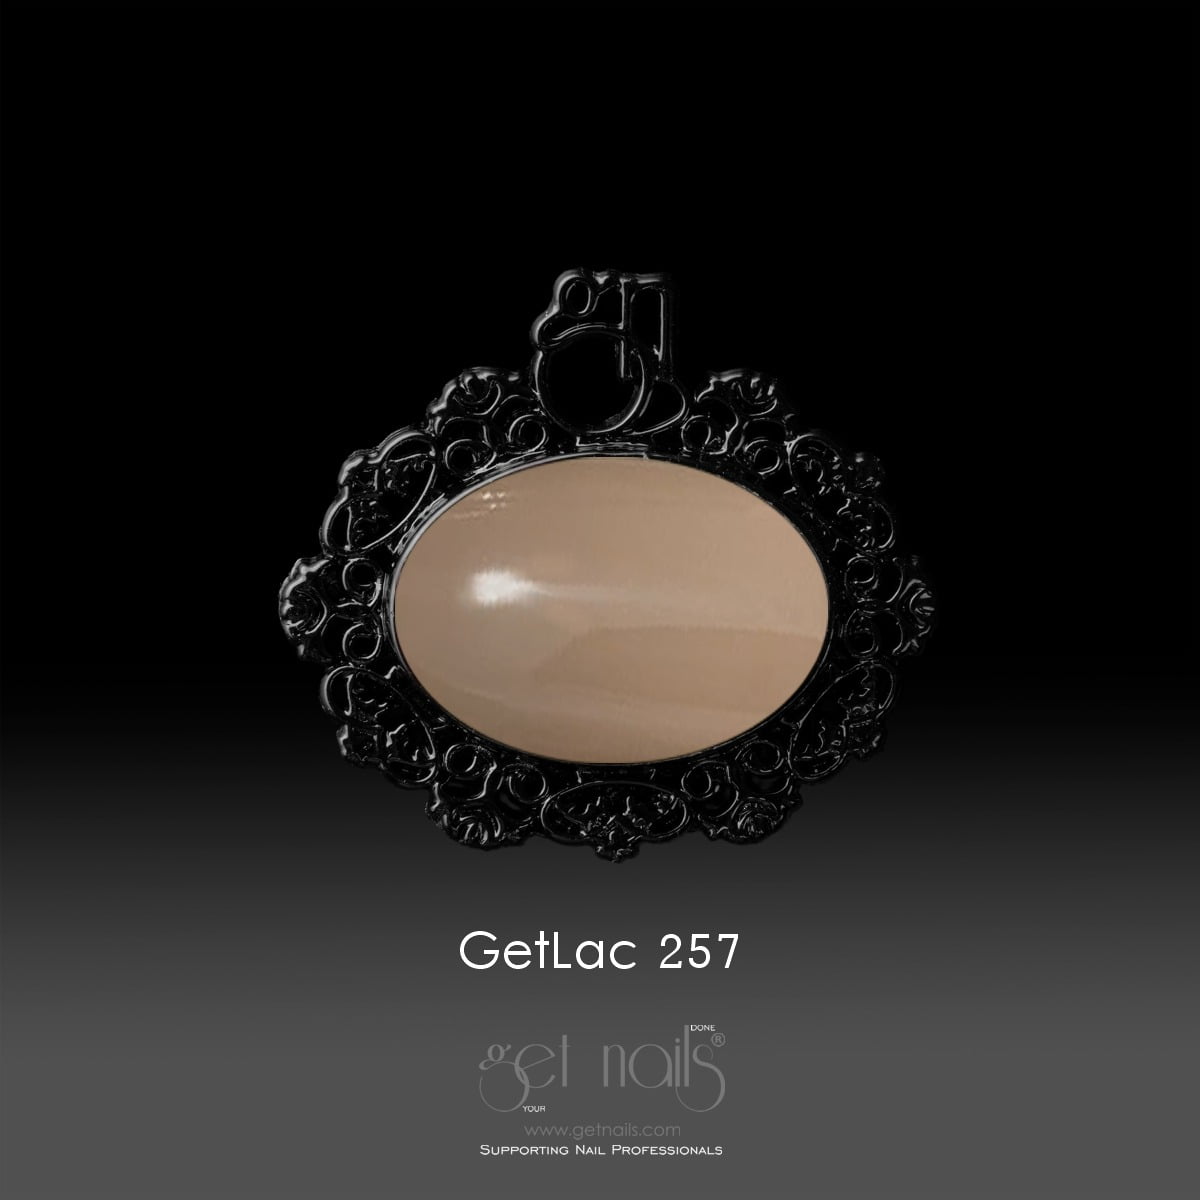 Get Nails Austria - GetLac 268 15g Pirouette